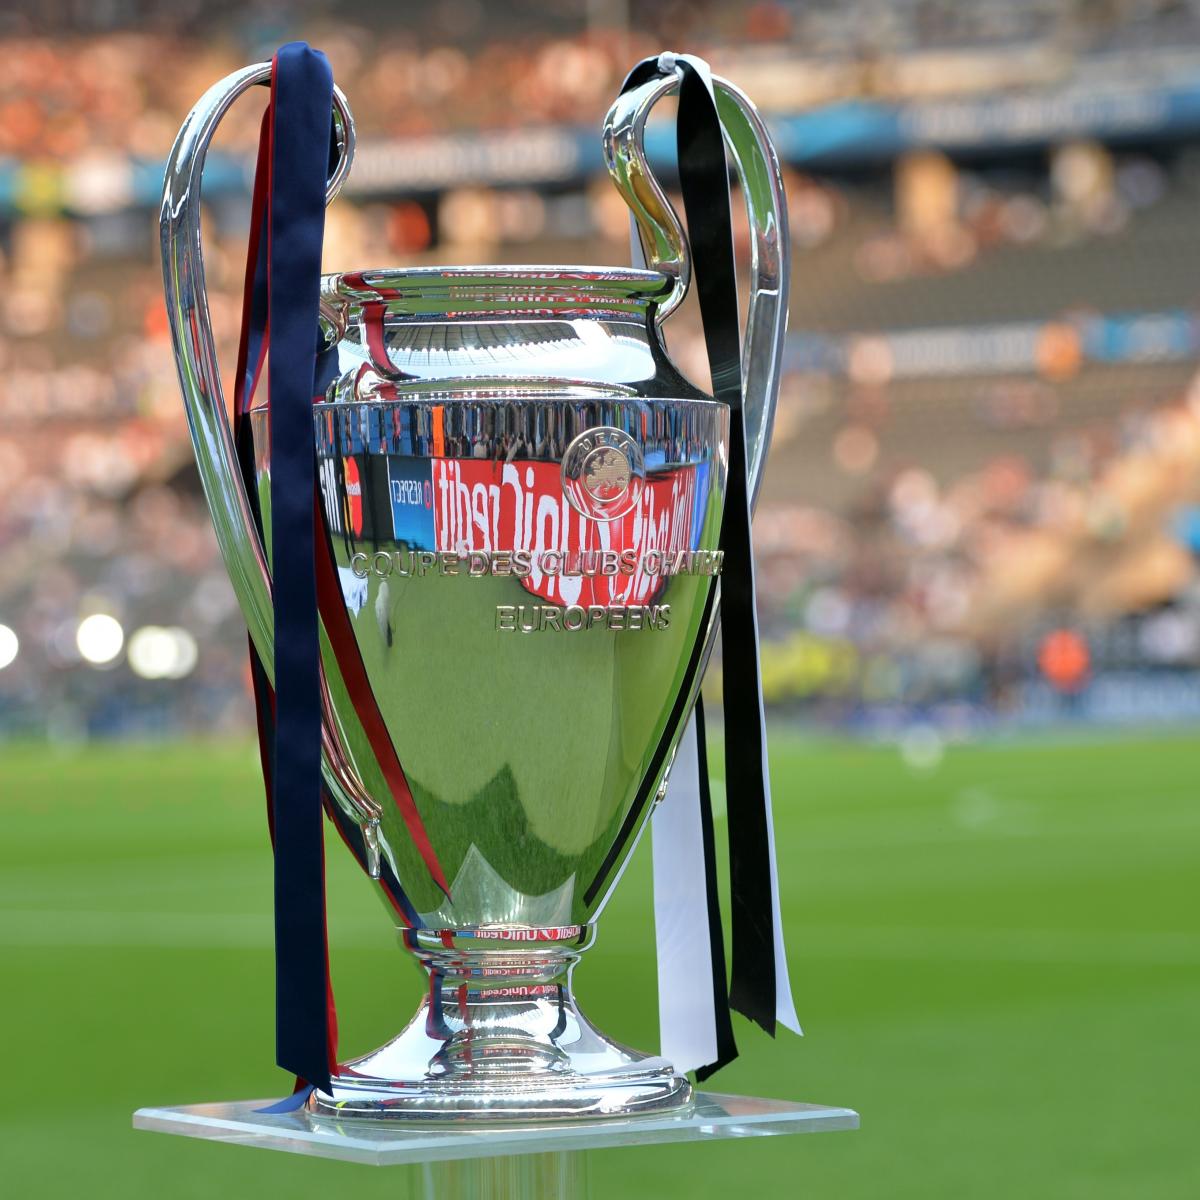 Football world: UEFA Champions League 2015/16 - Oitavas de final